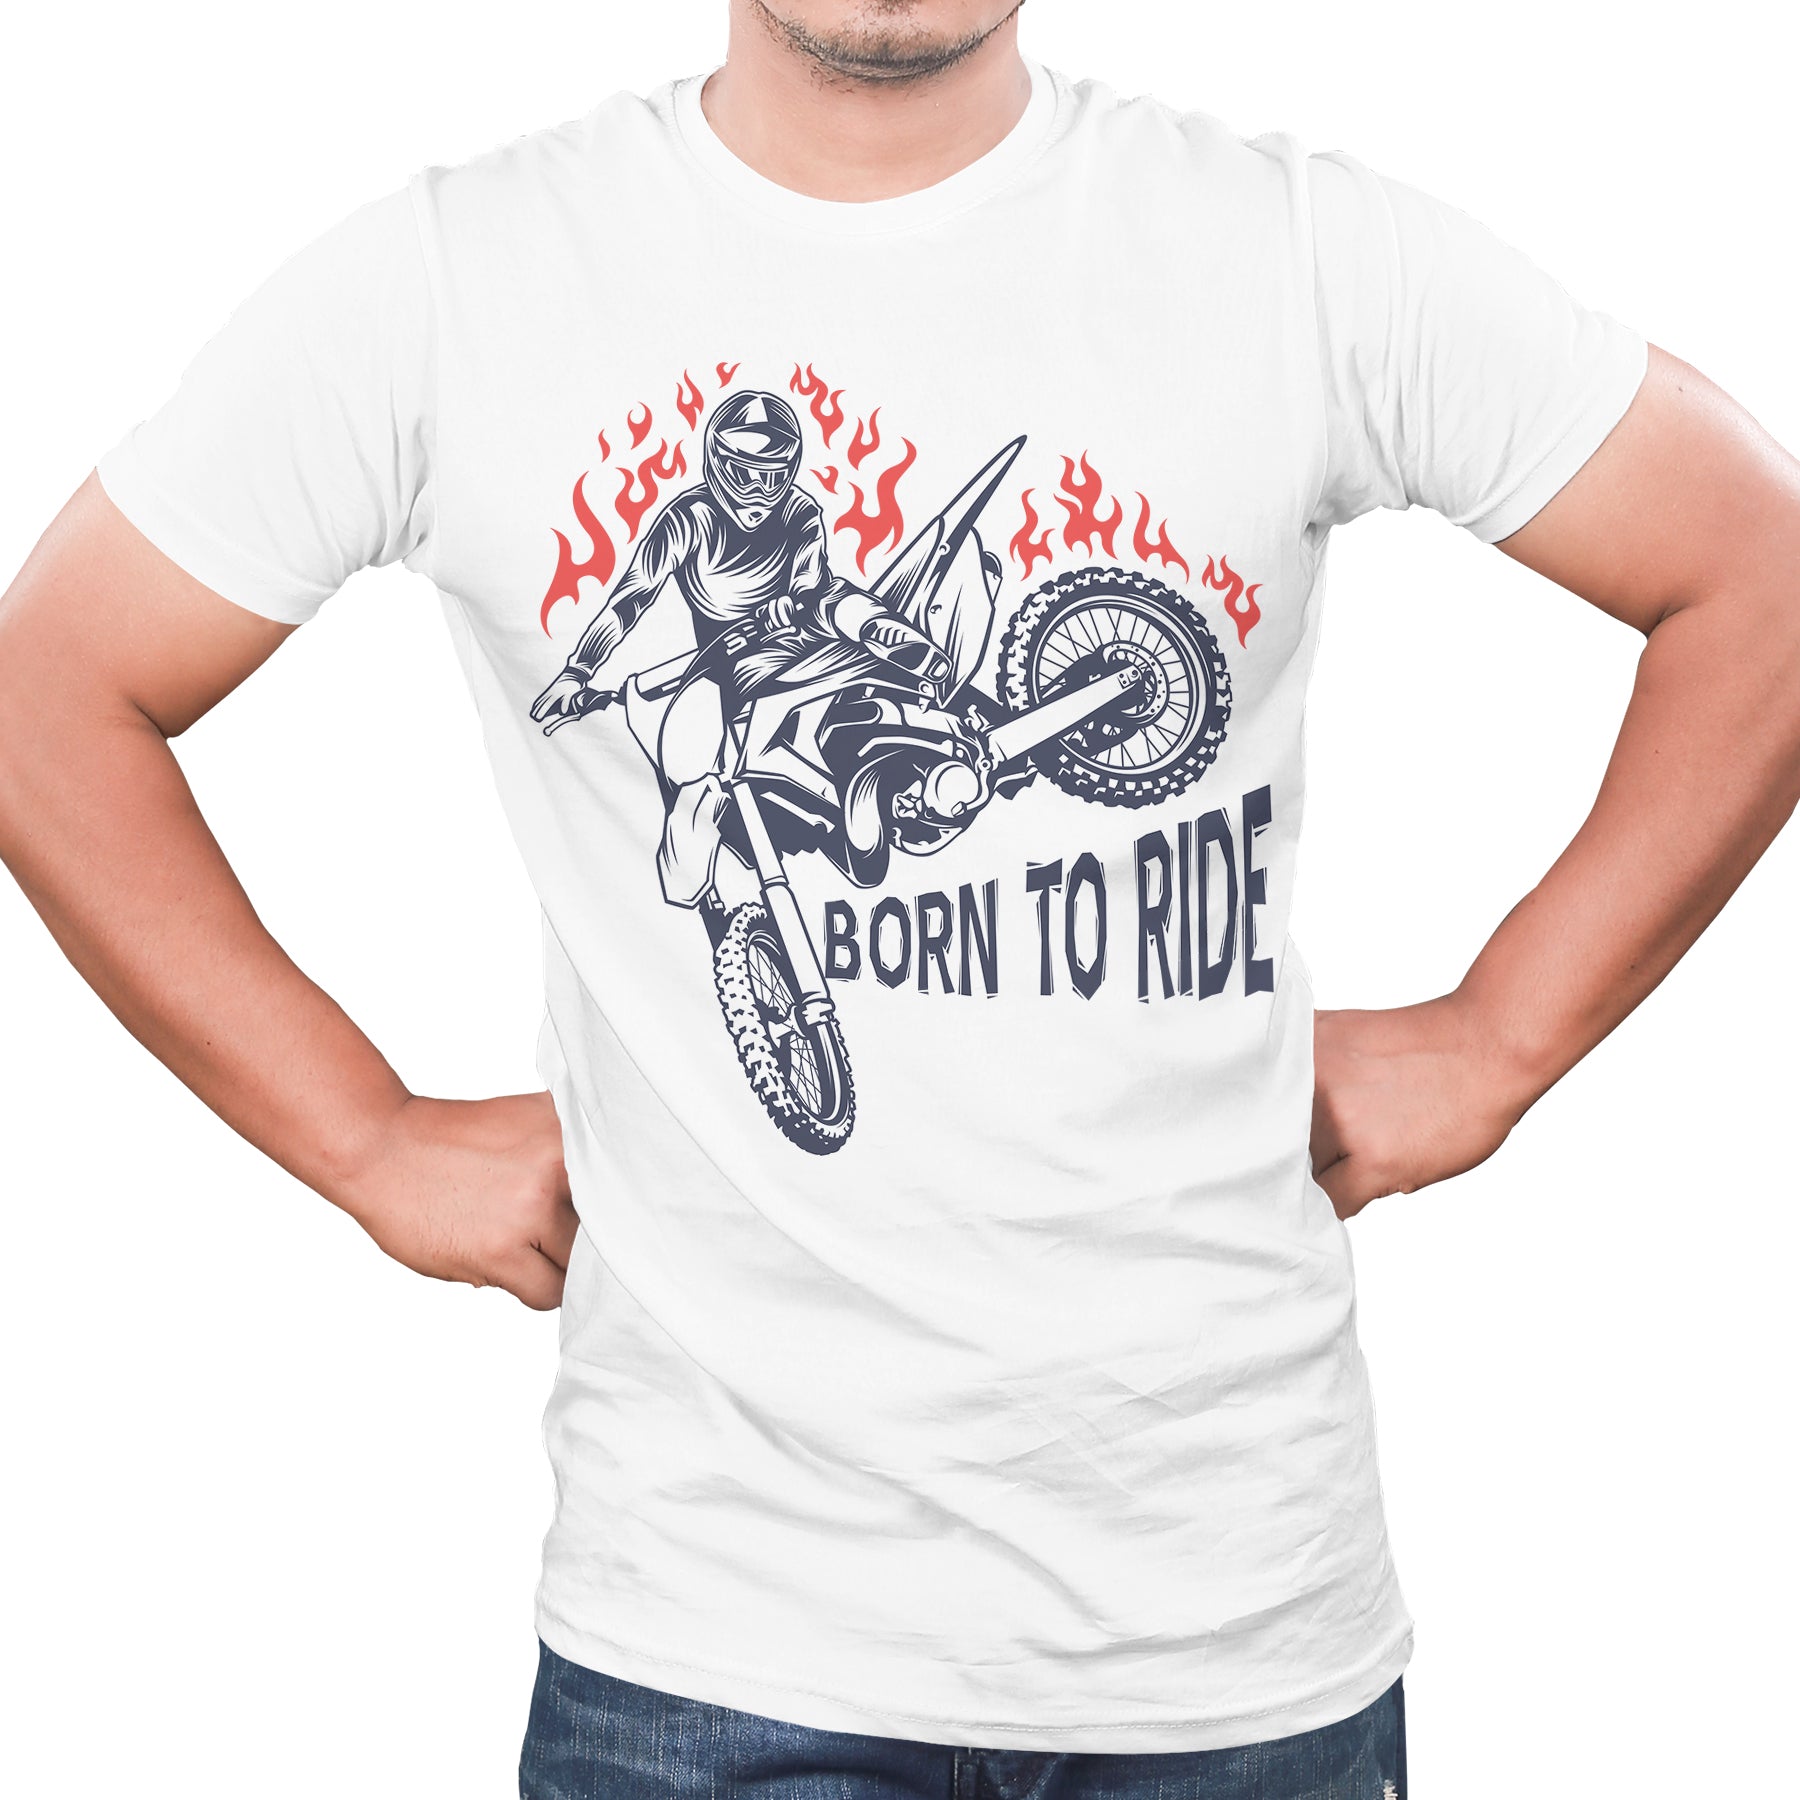 Born to ride quote Biker t shirts -White